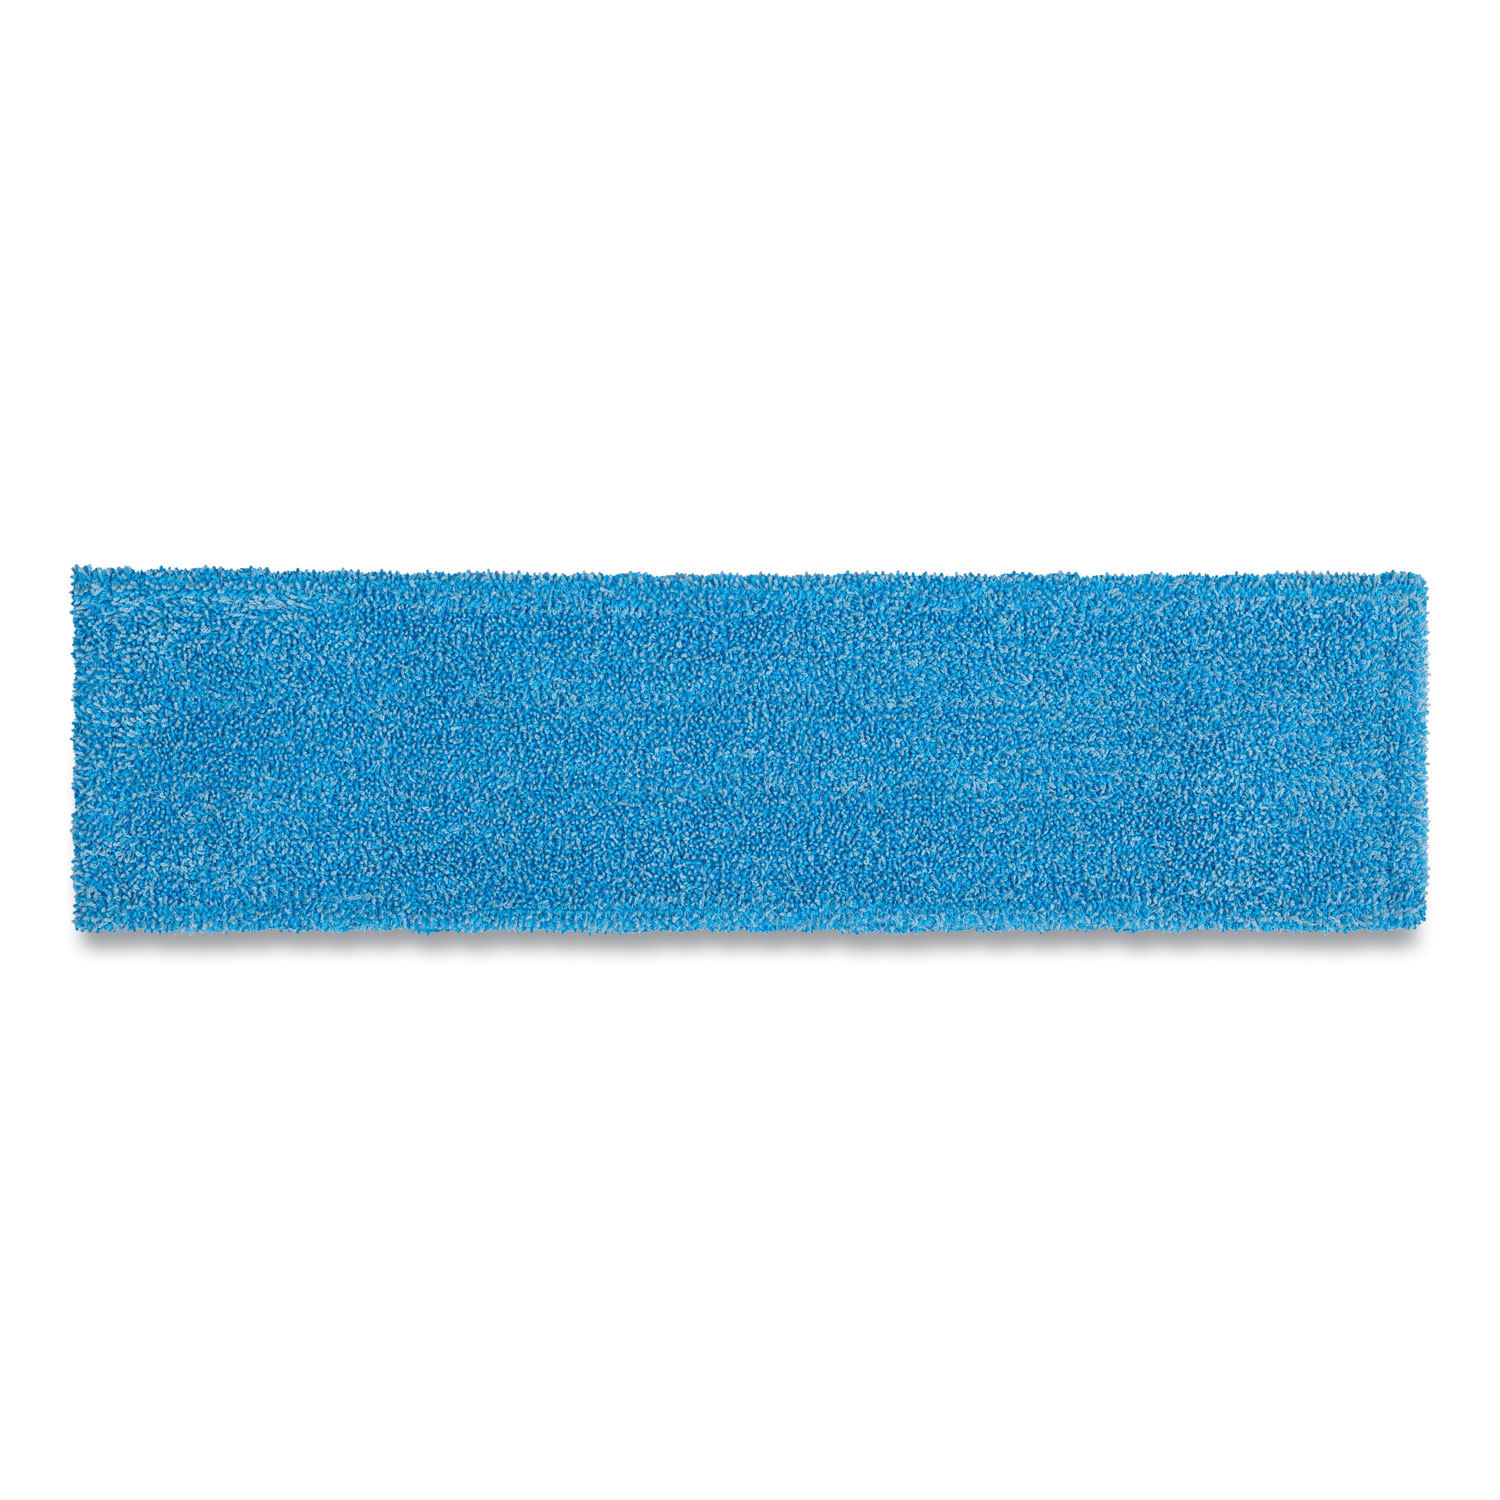 Rubbermaid High Absorbency Mop Pad, Nylon/Polyester Microfiber, 18